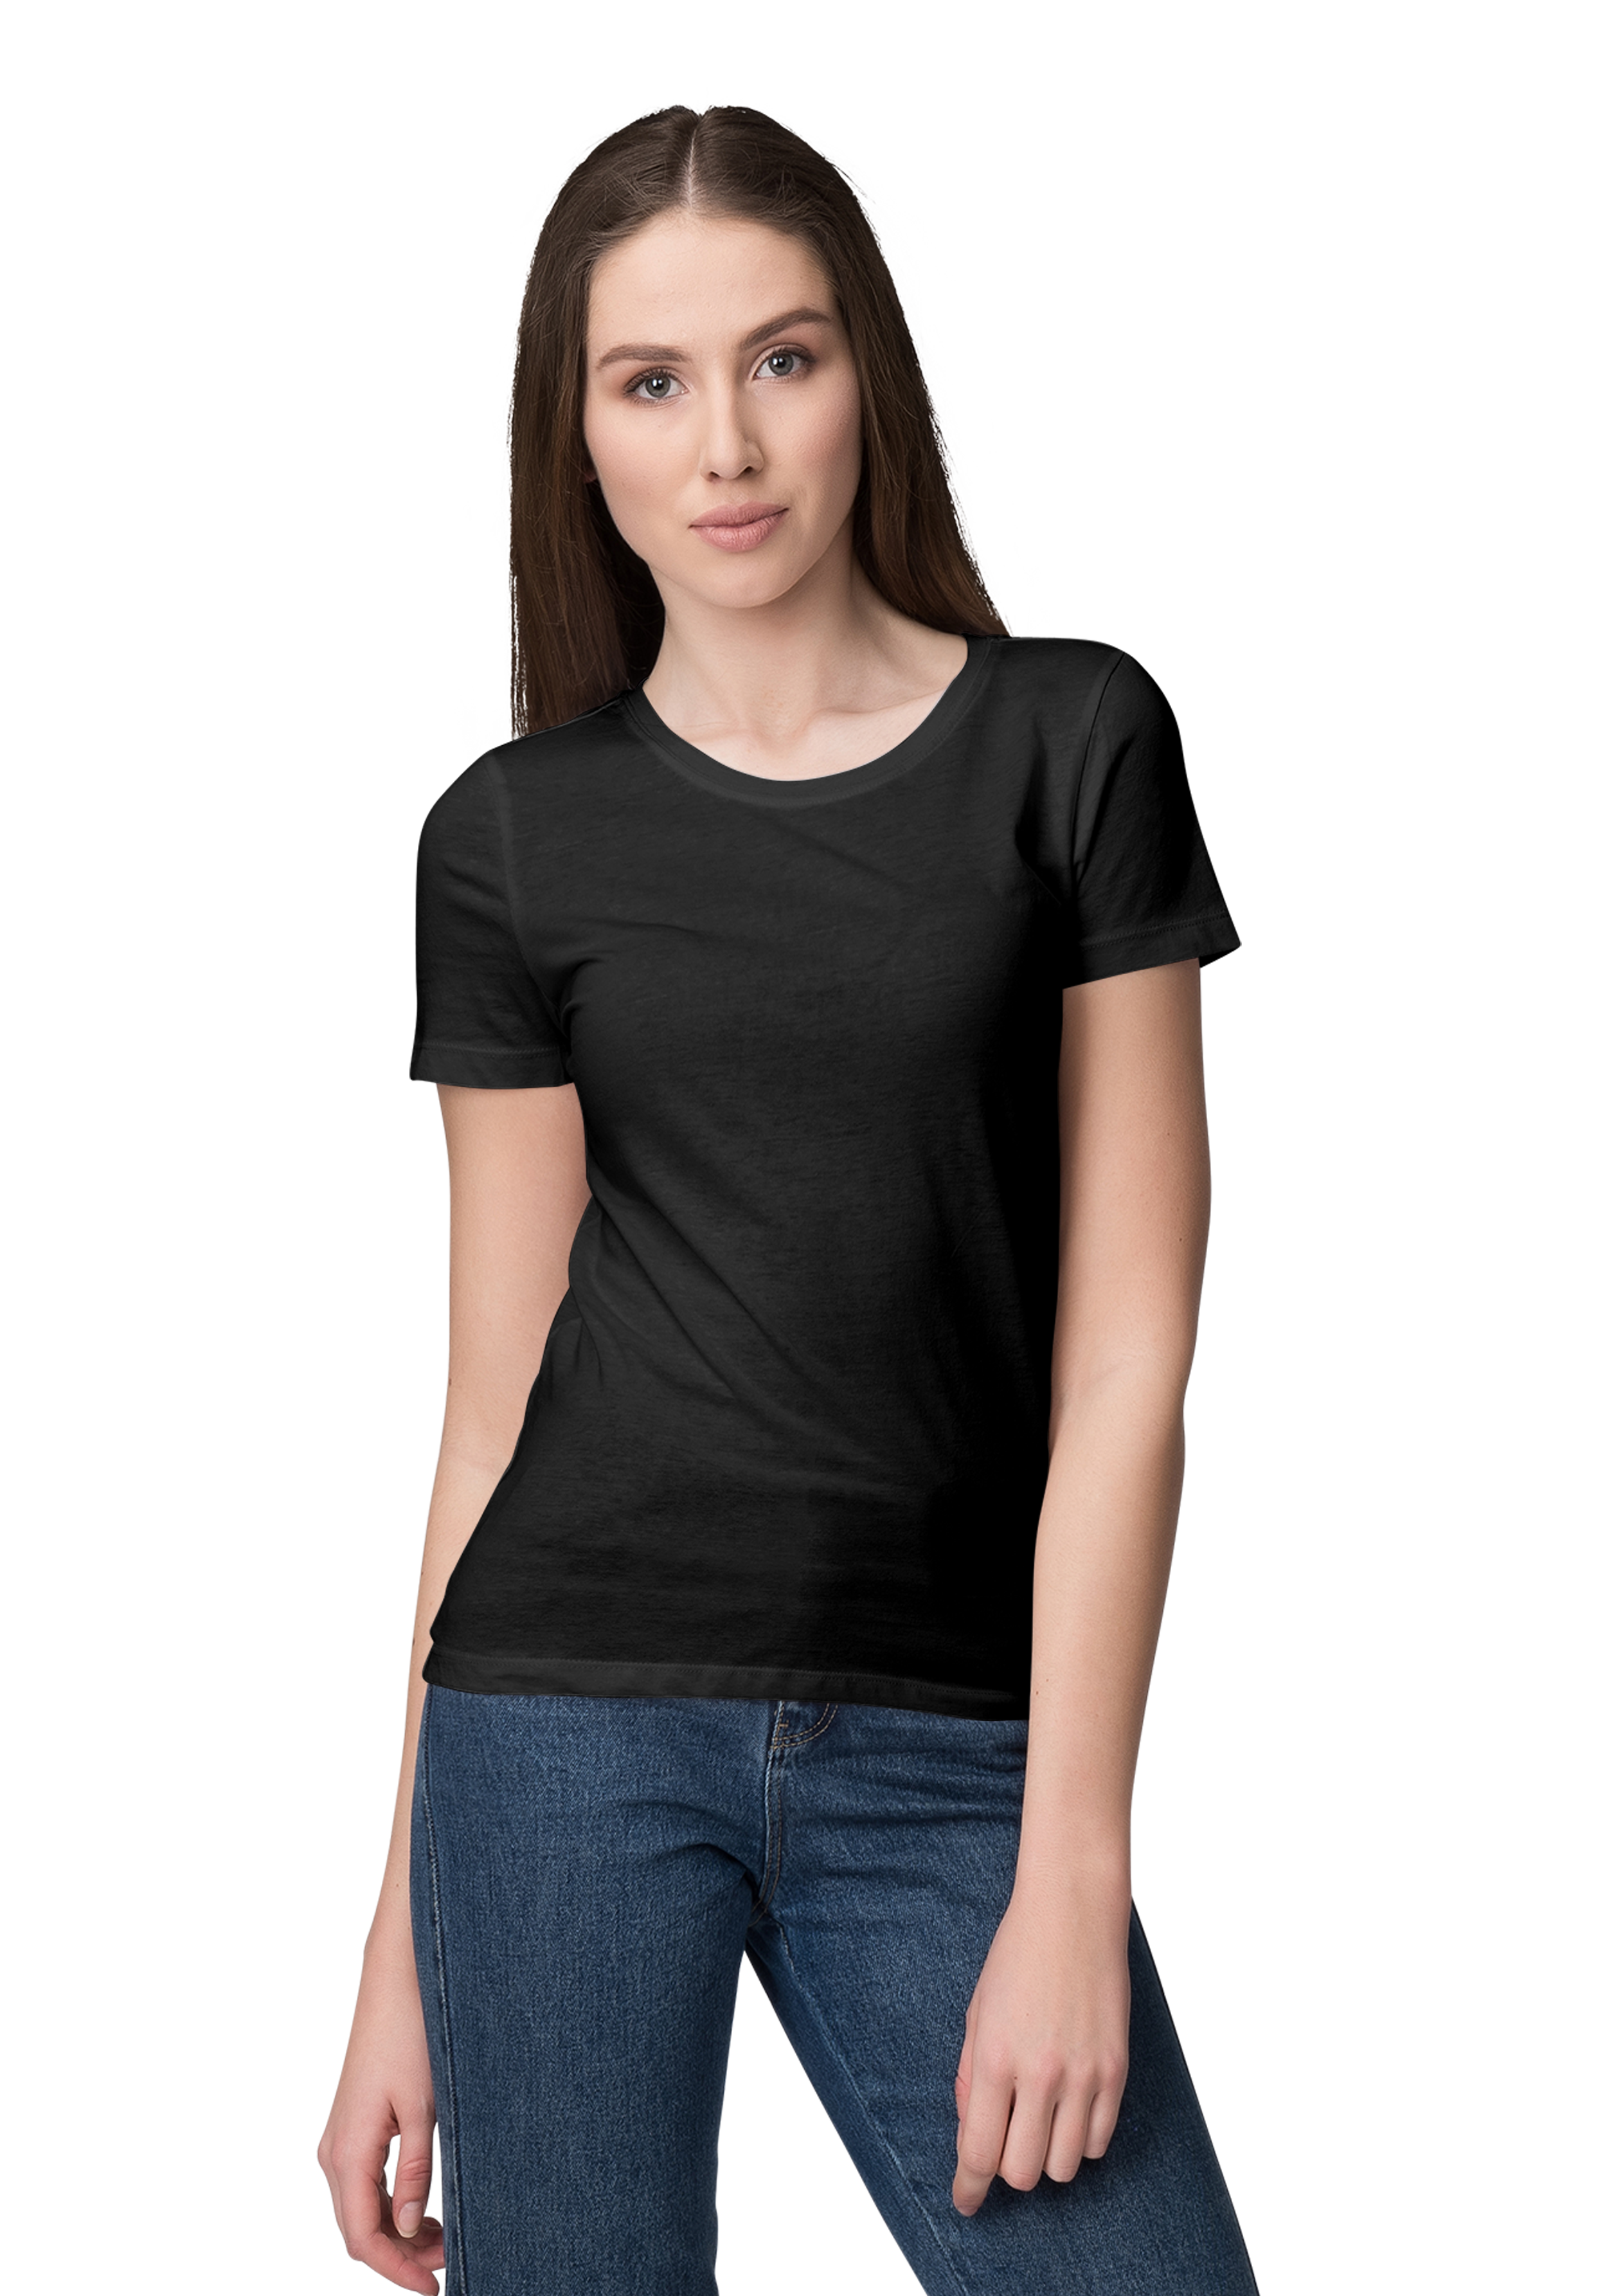 Unisex Basic Plain Black T-shirt